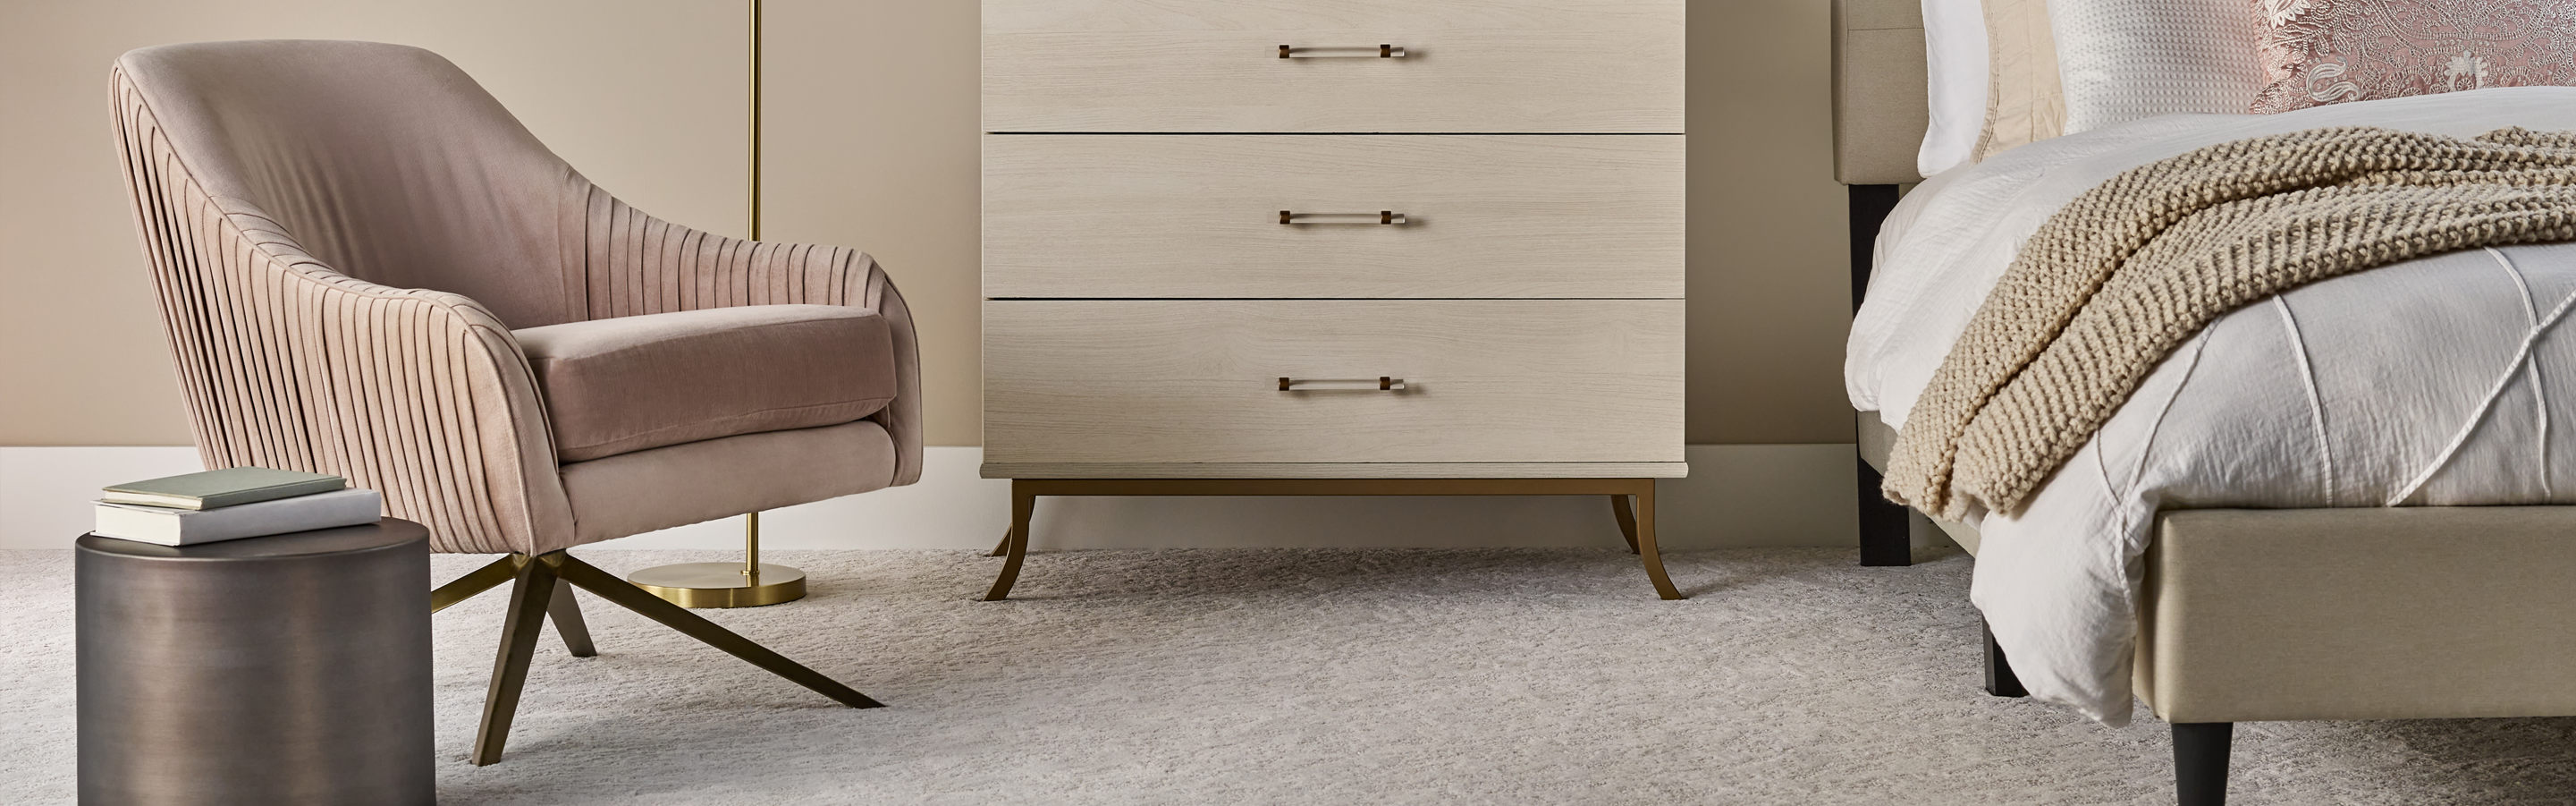 neutral beige plush carpet in bedroom